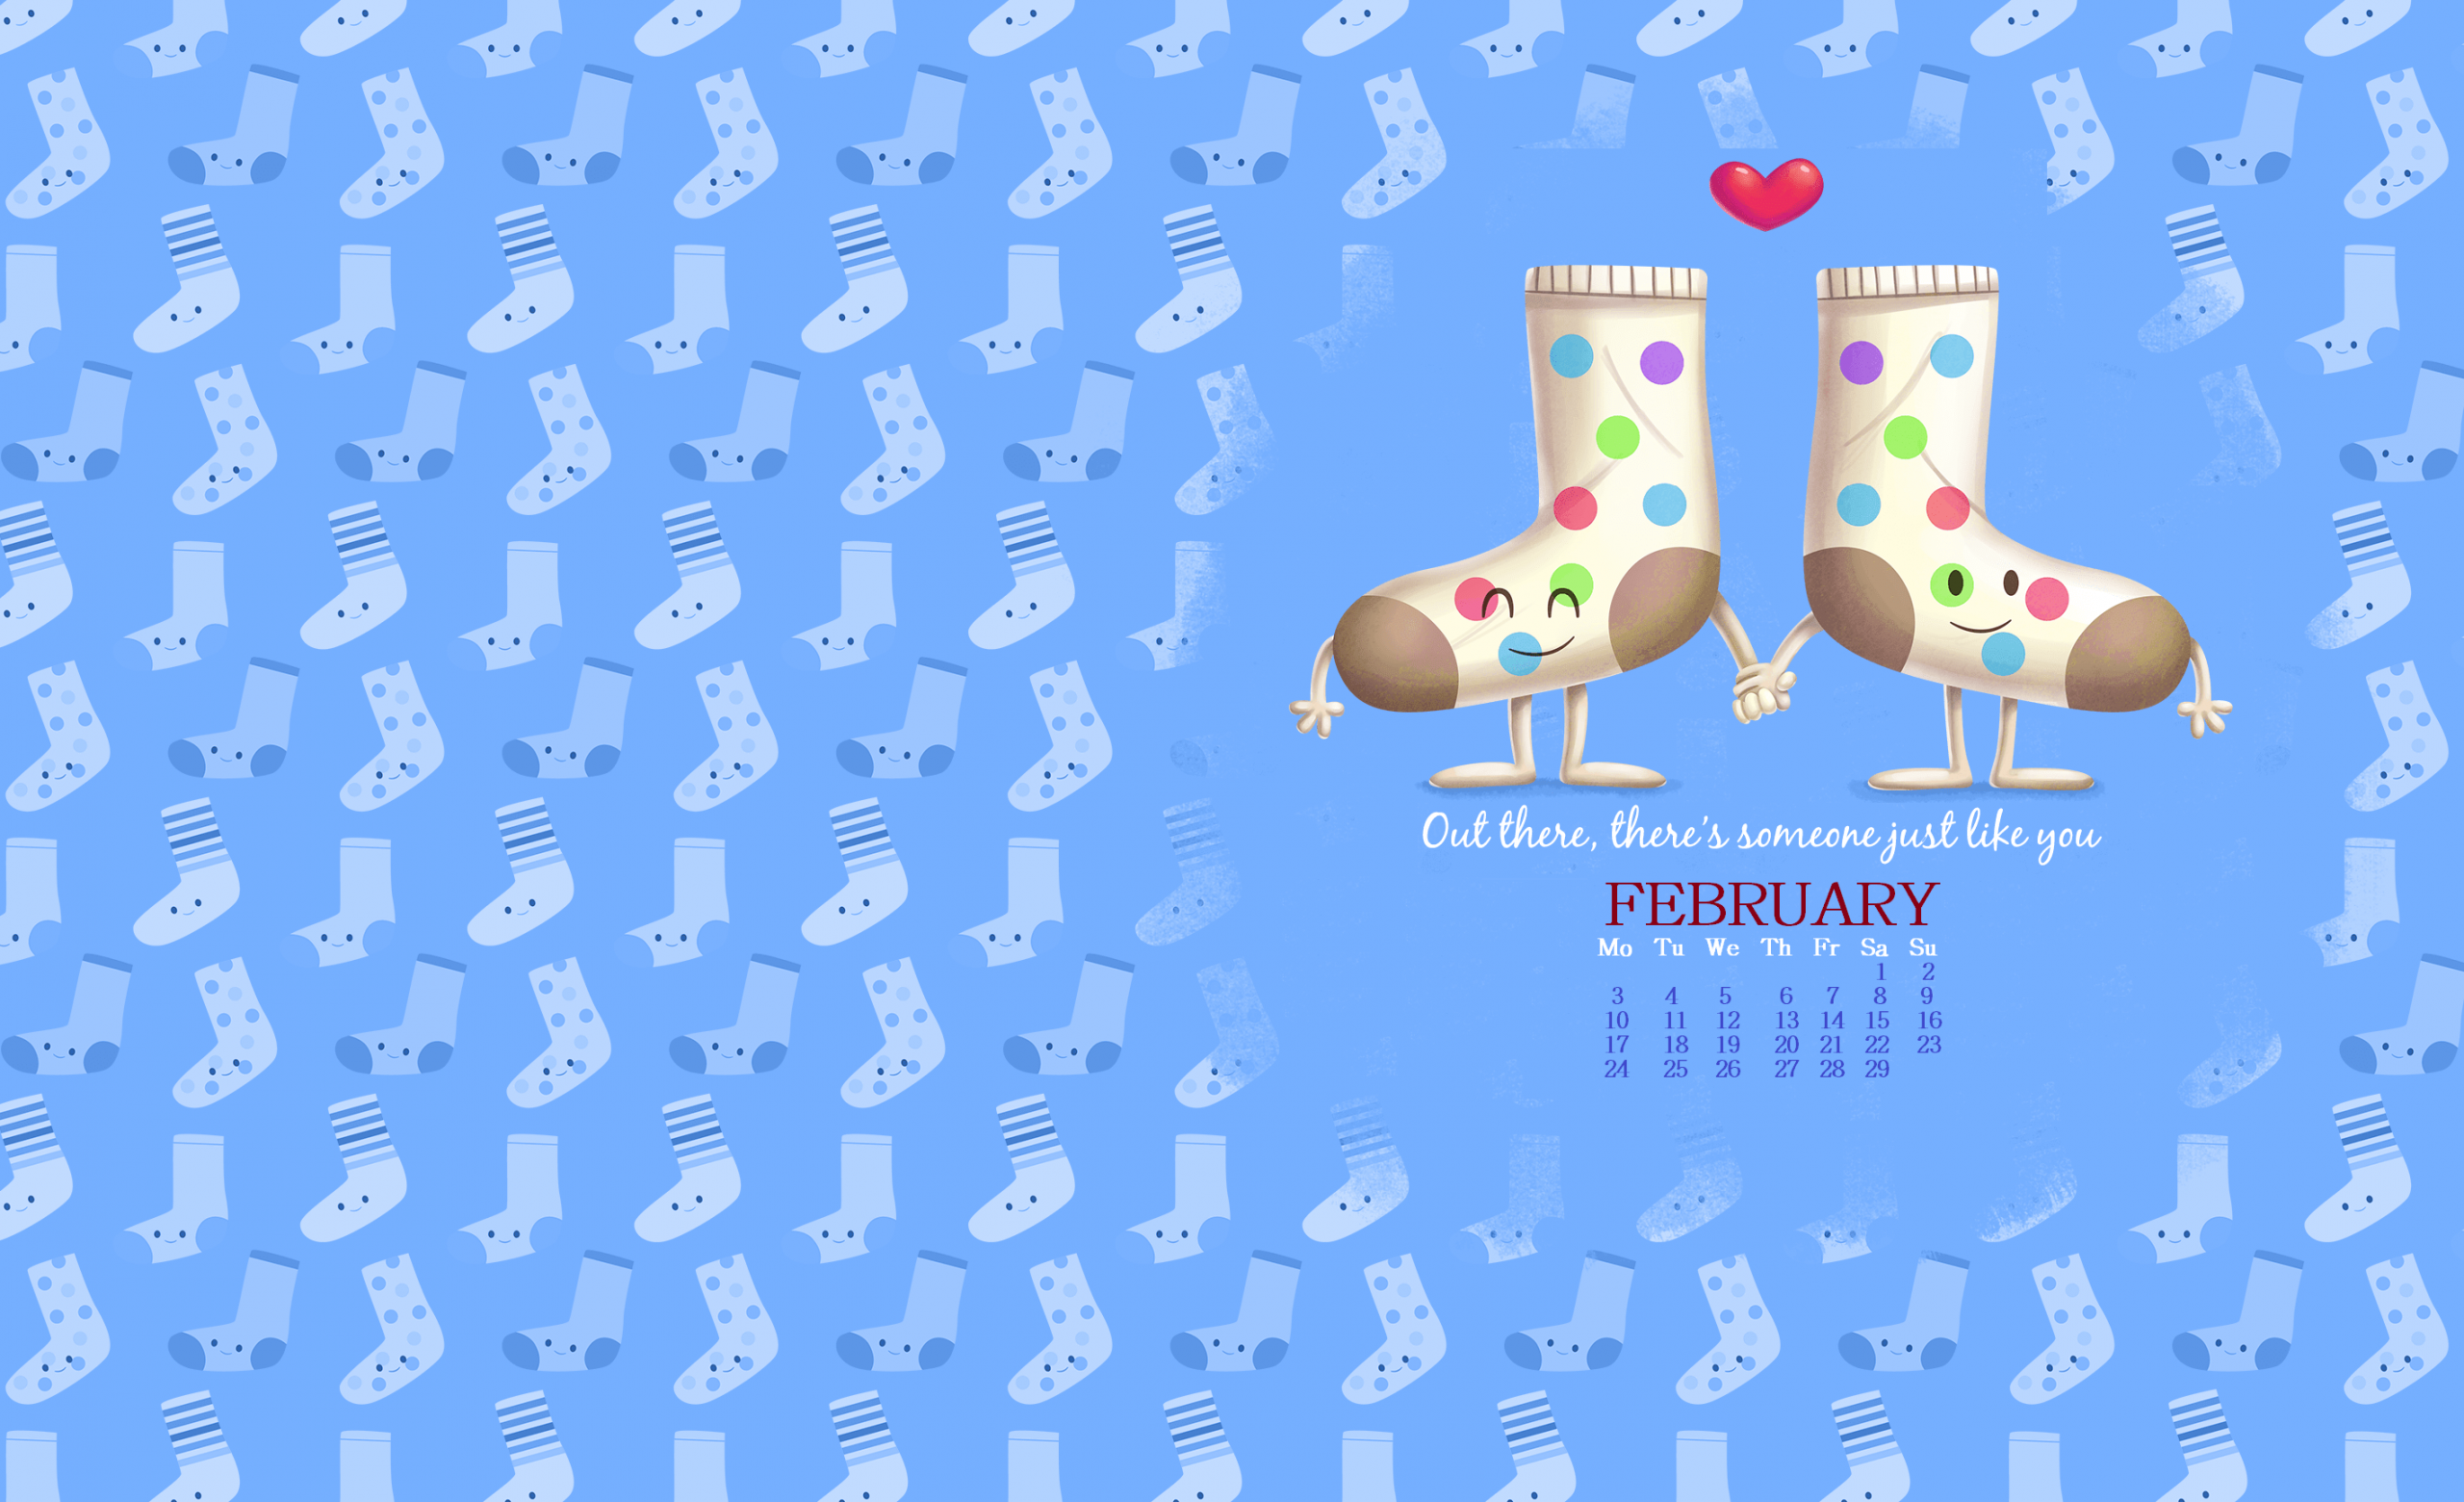 February 2020 Desktop Wallpaper Max Calendars